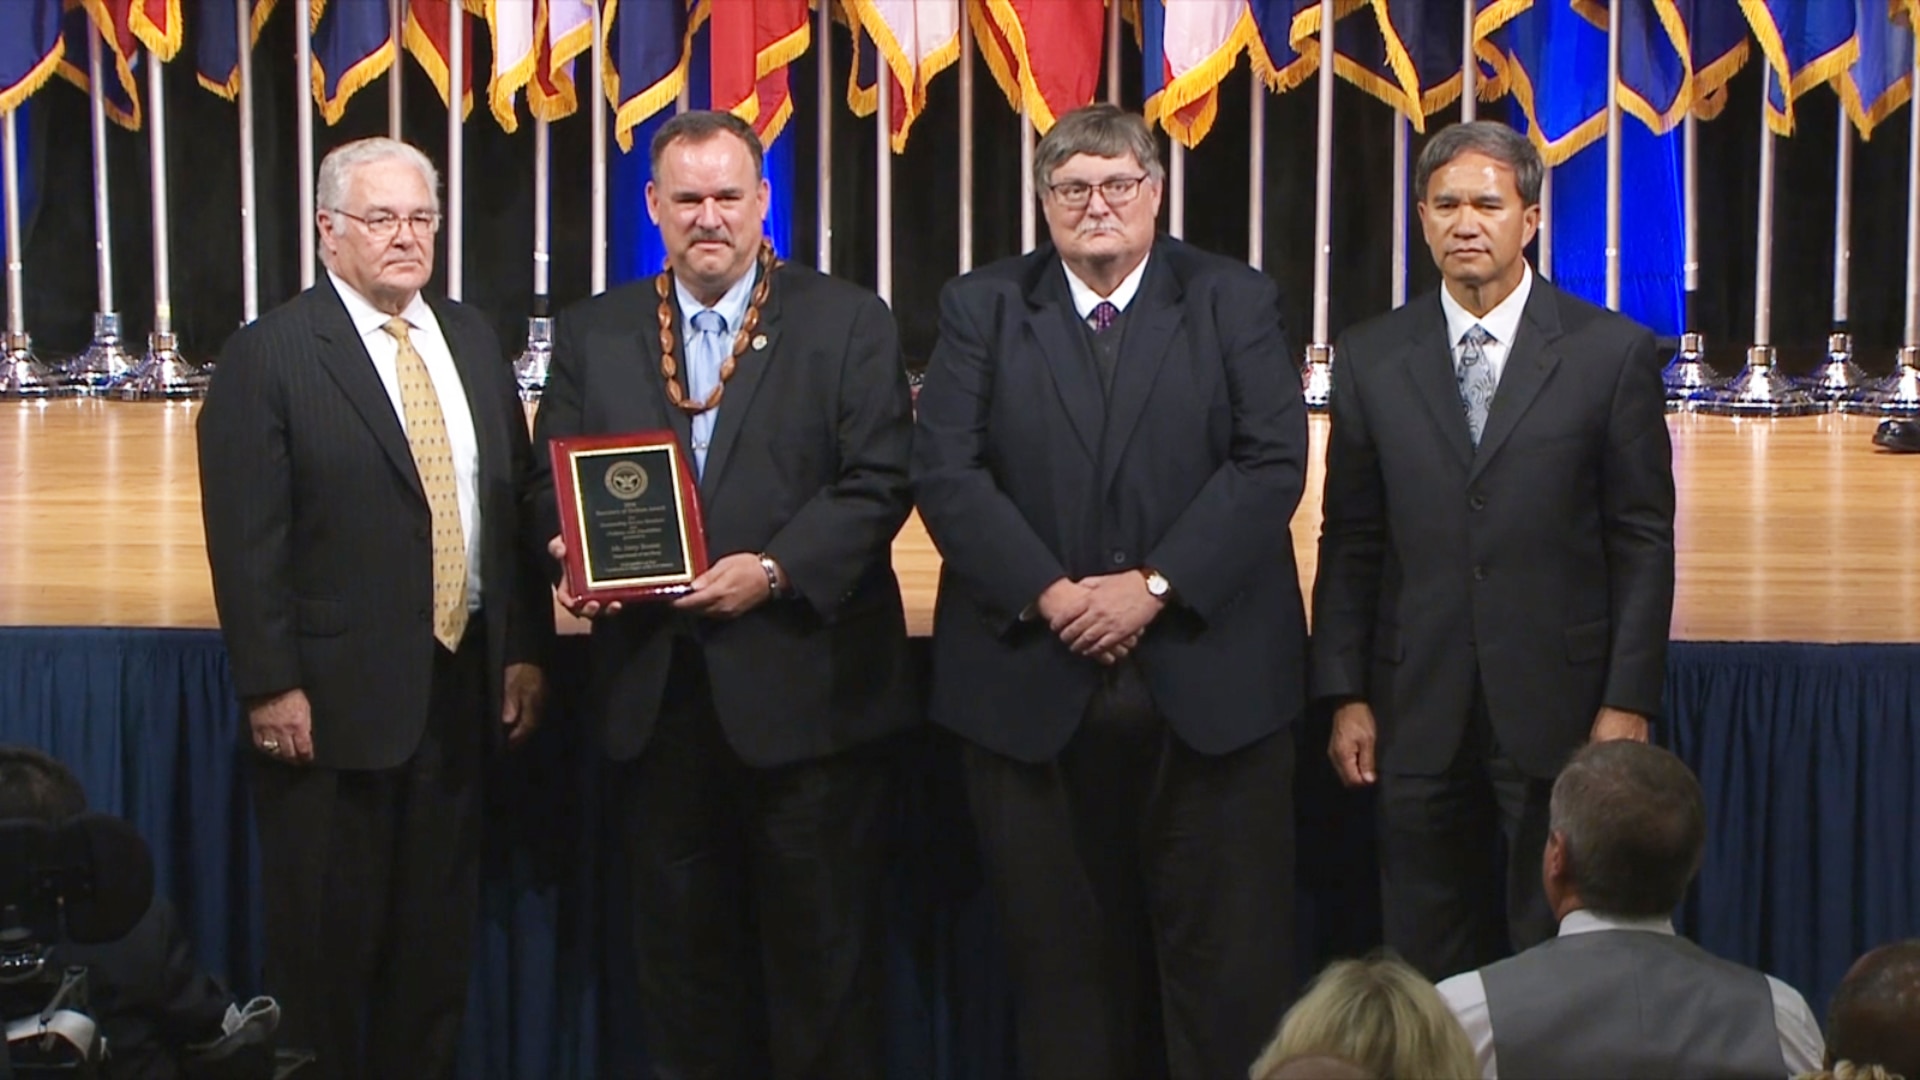 INDOPACOM Navy Civilian Uses Disability Achievement Award to Raise Parkinson's Awareness